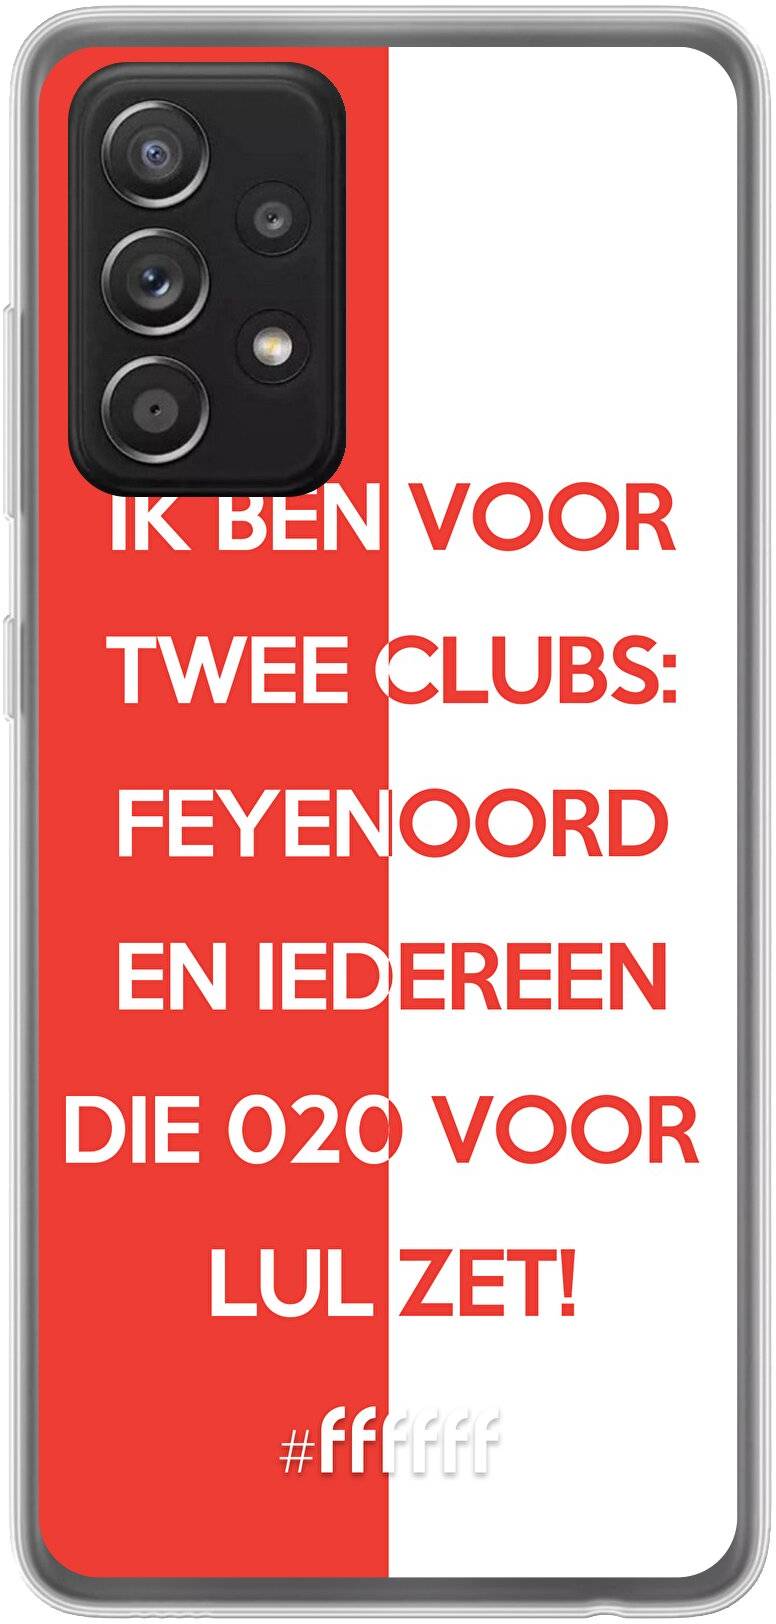 Feyenoord - Quote Galaxy A52